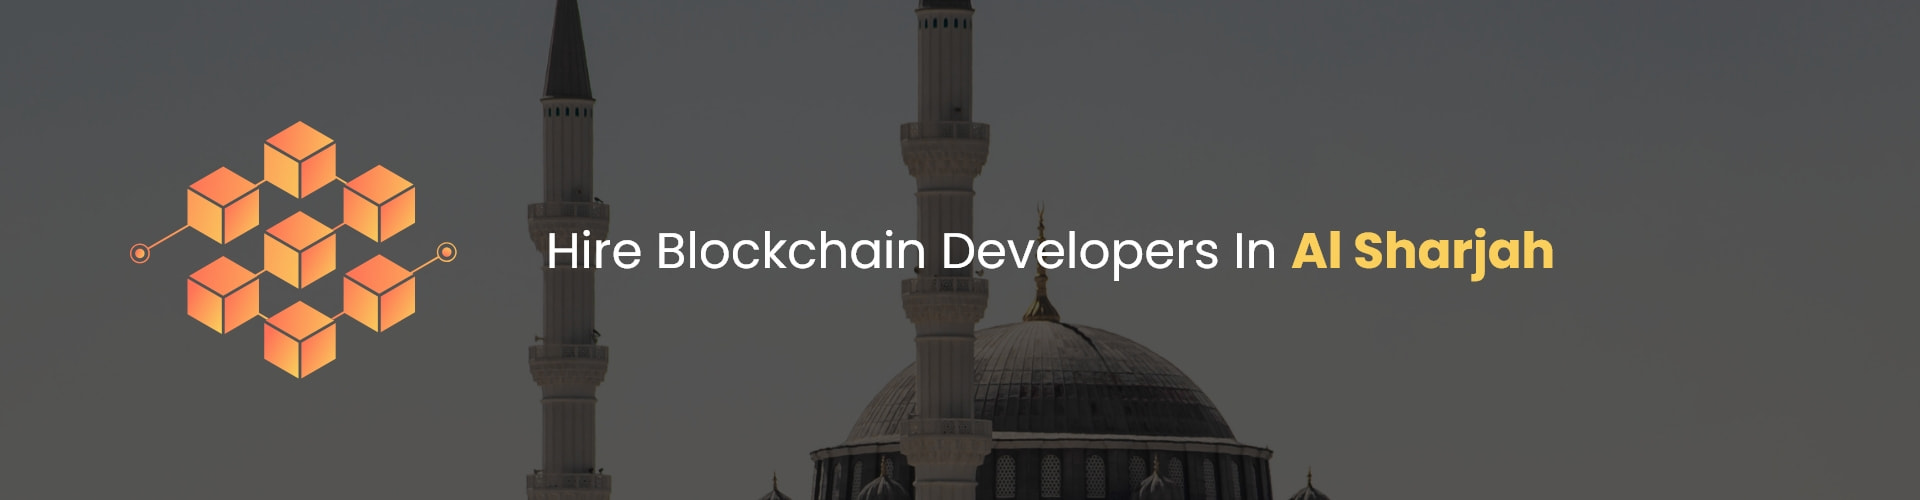 hire blockchain developers in al sharjah